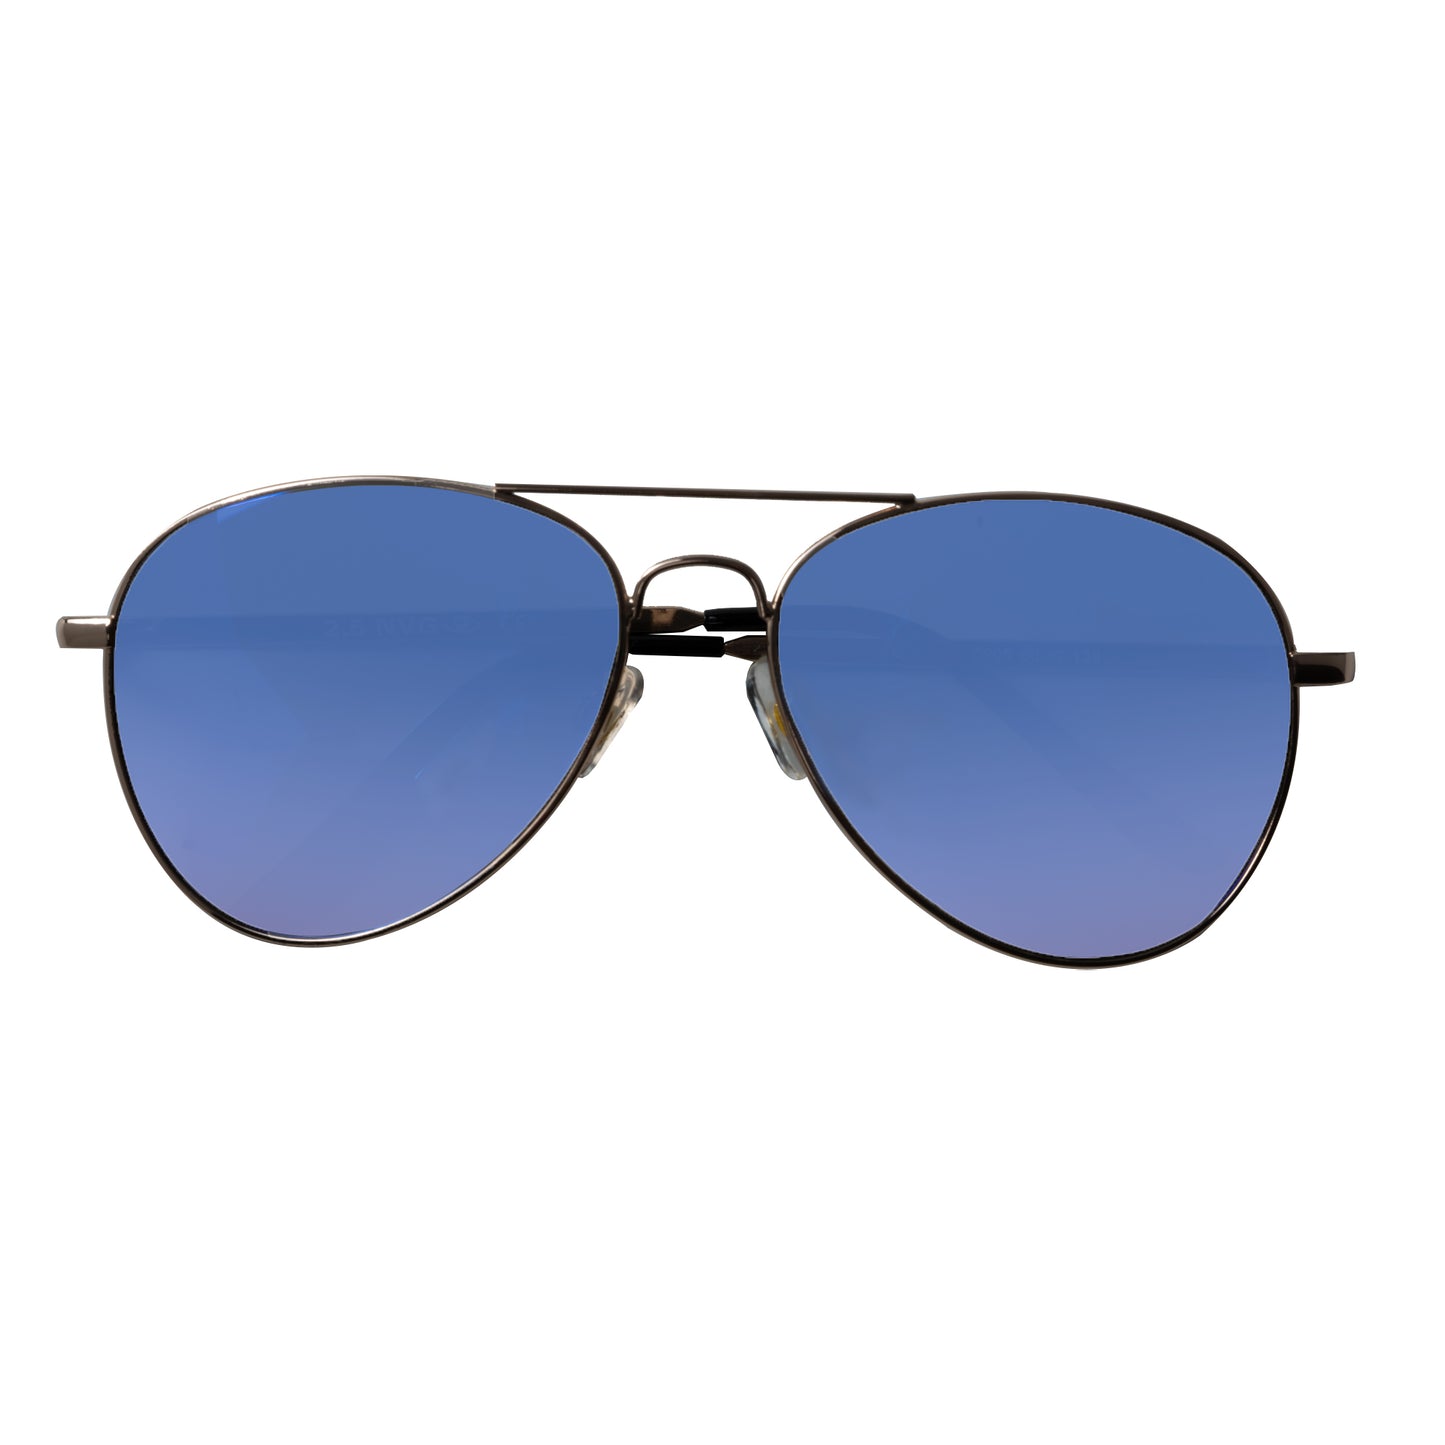 2.5 NVG UV Protected Gold Blue Aviator Sunglasses